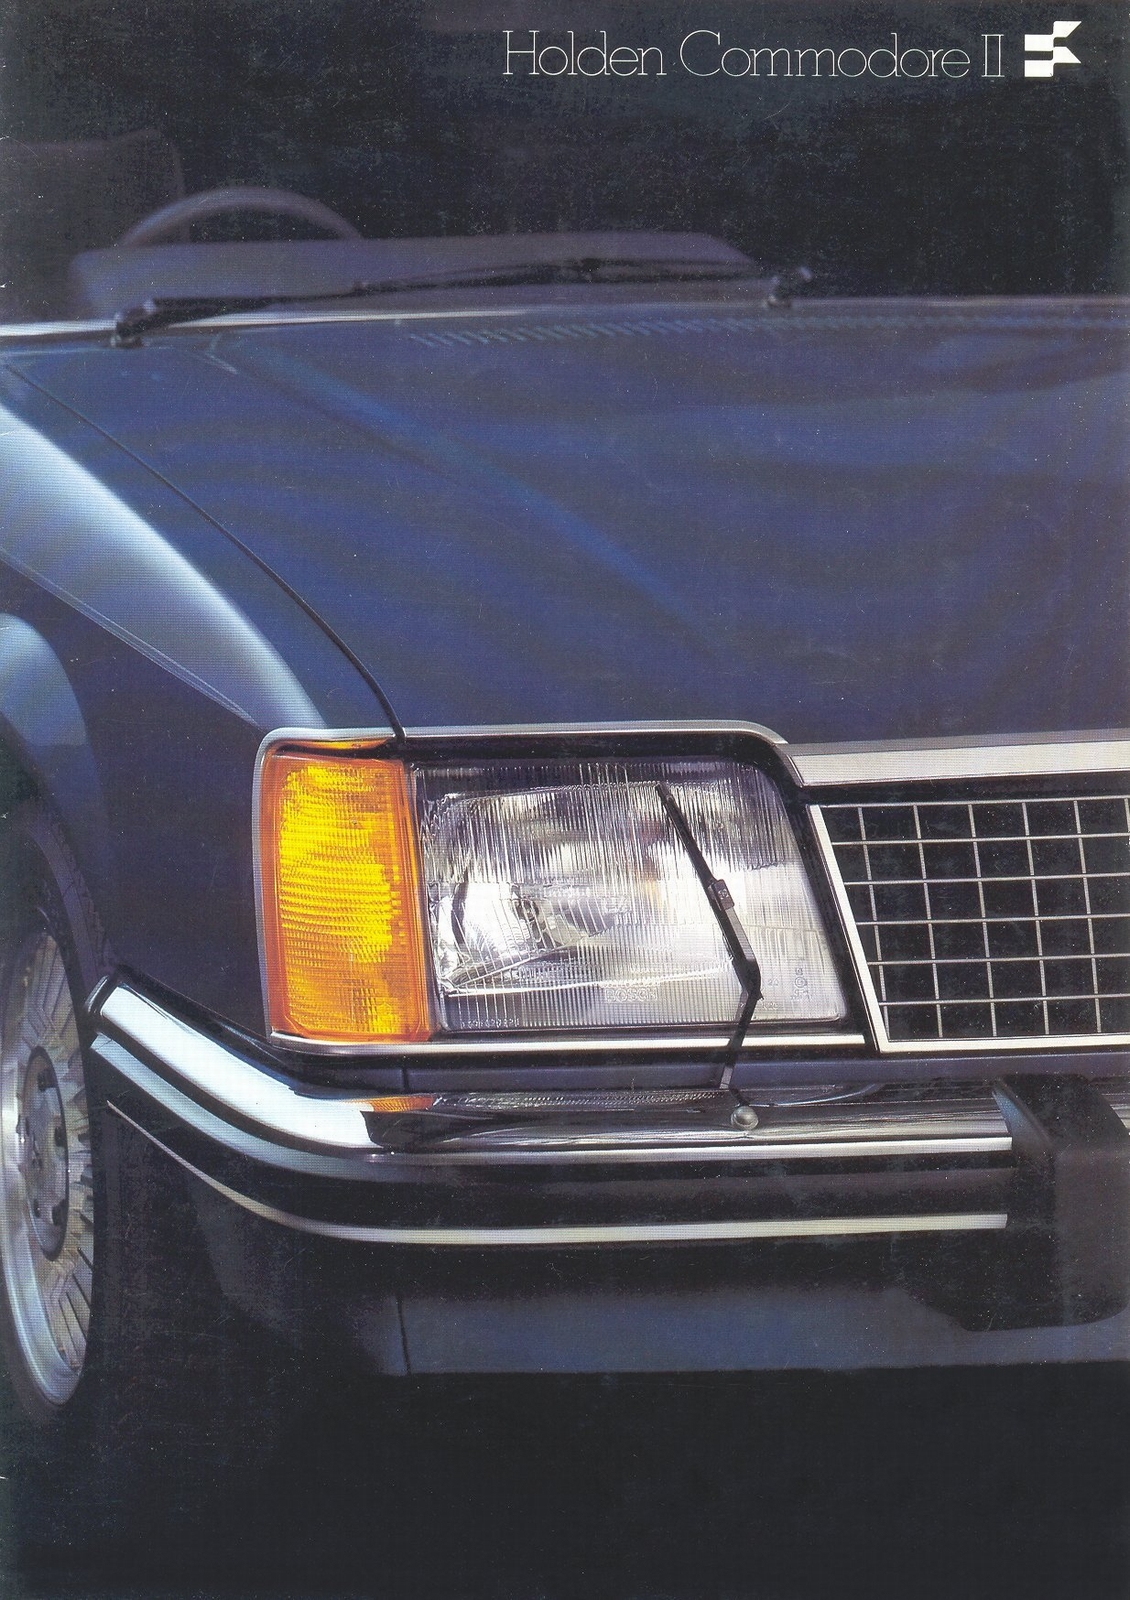 n_1980 Holden Commodore-01.jpg